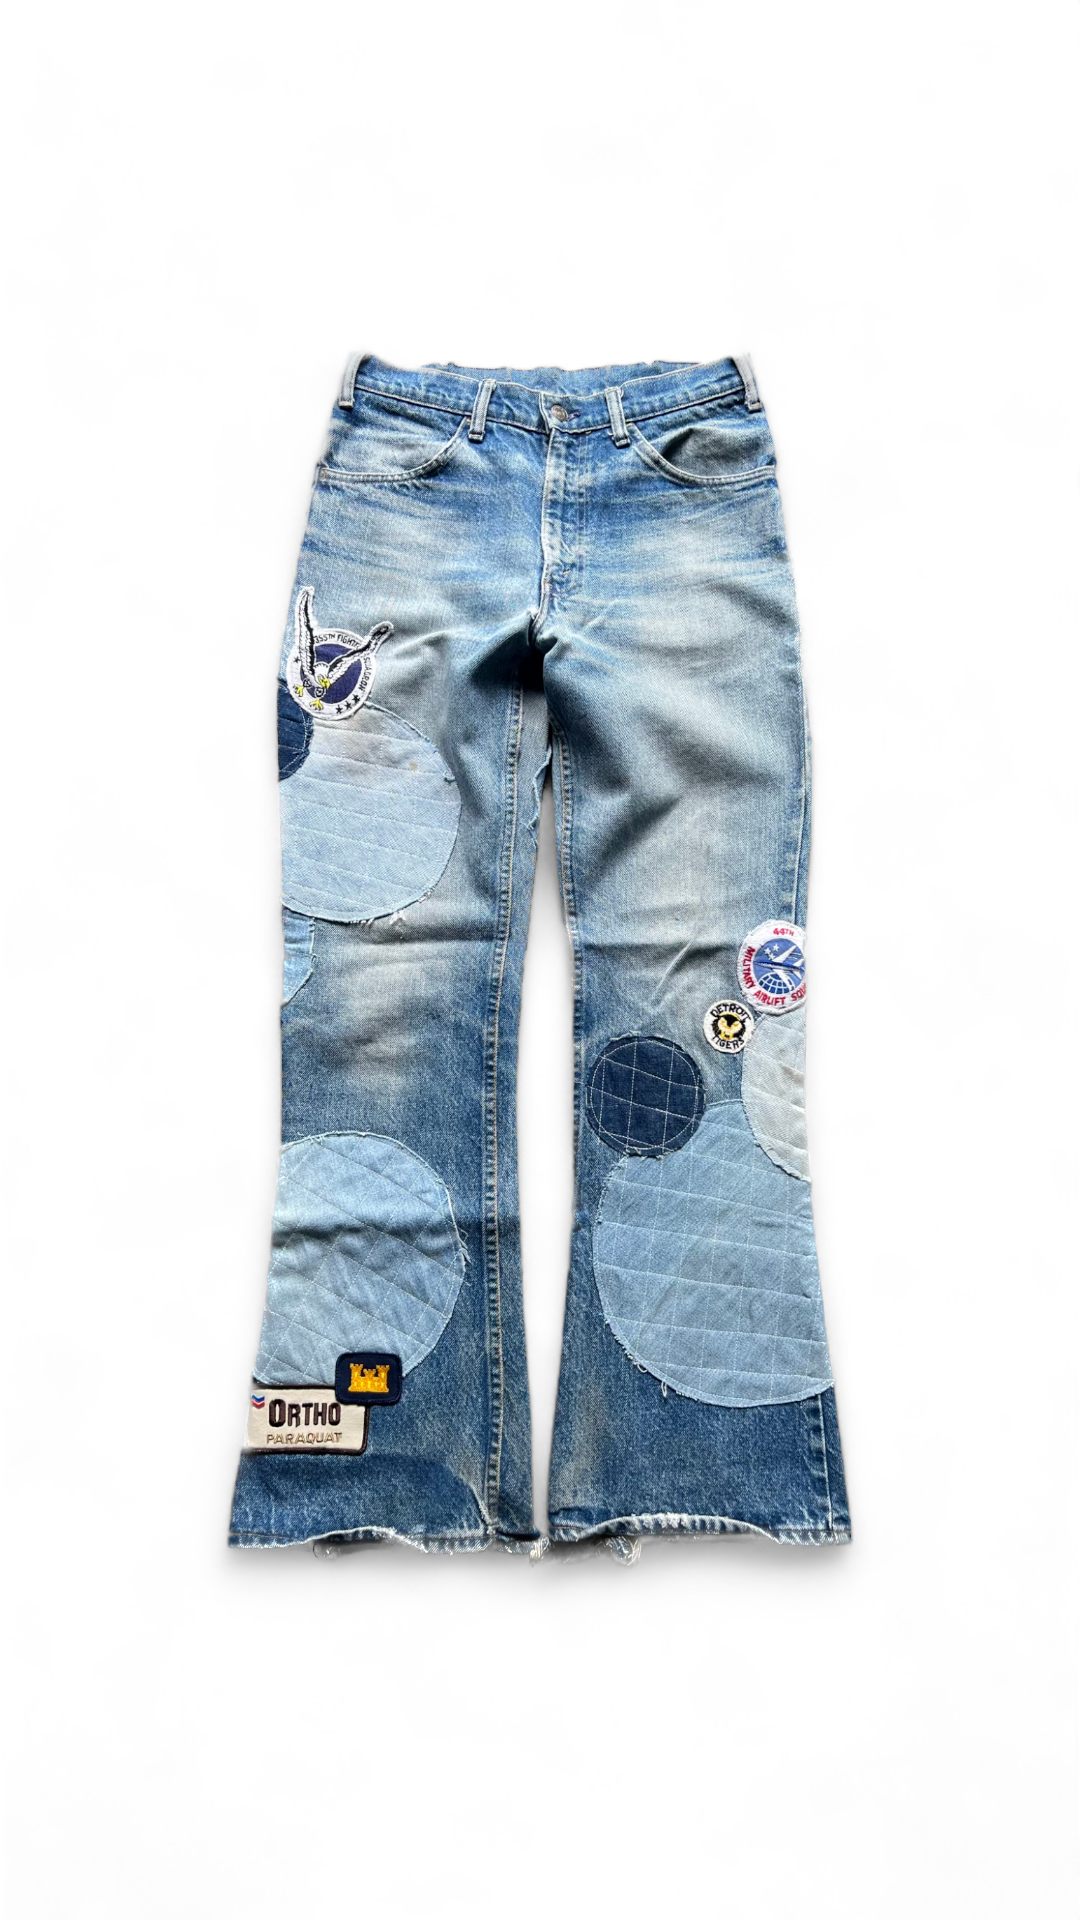 VTG Hand Reworked 80s Patchwork Flared Levi’s Denim Jeans by D. Turner Sz 30x30